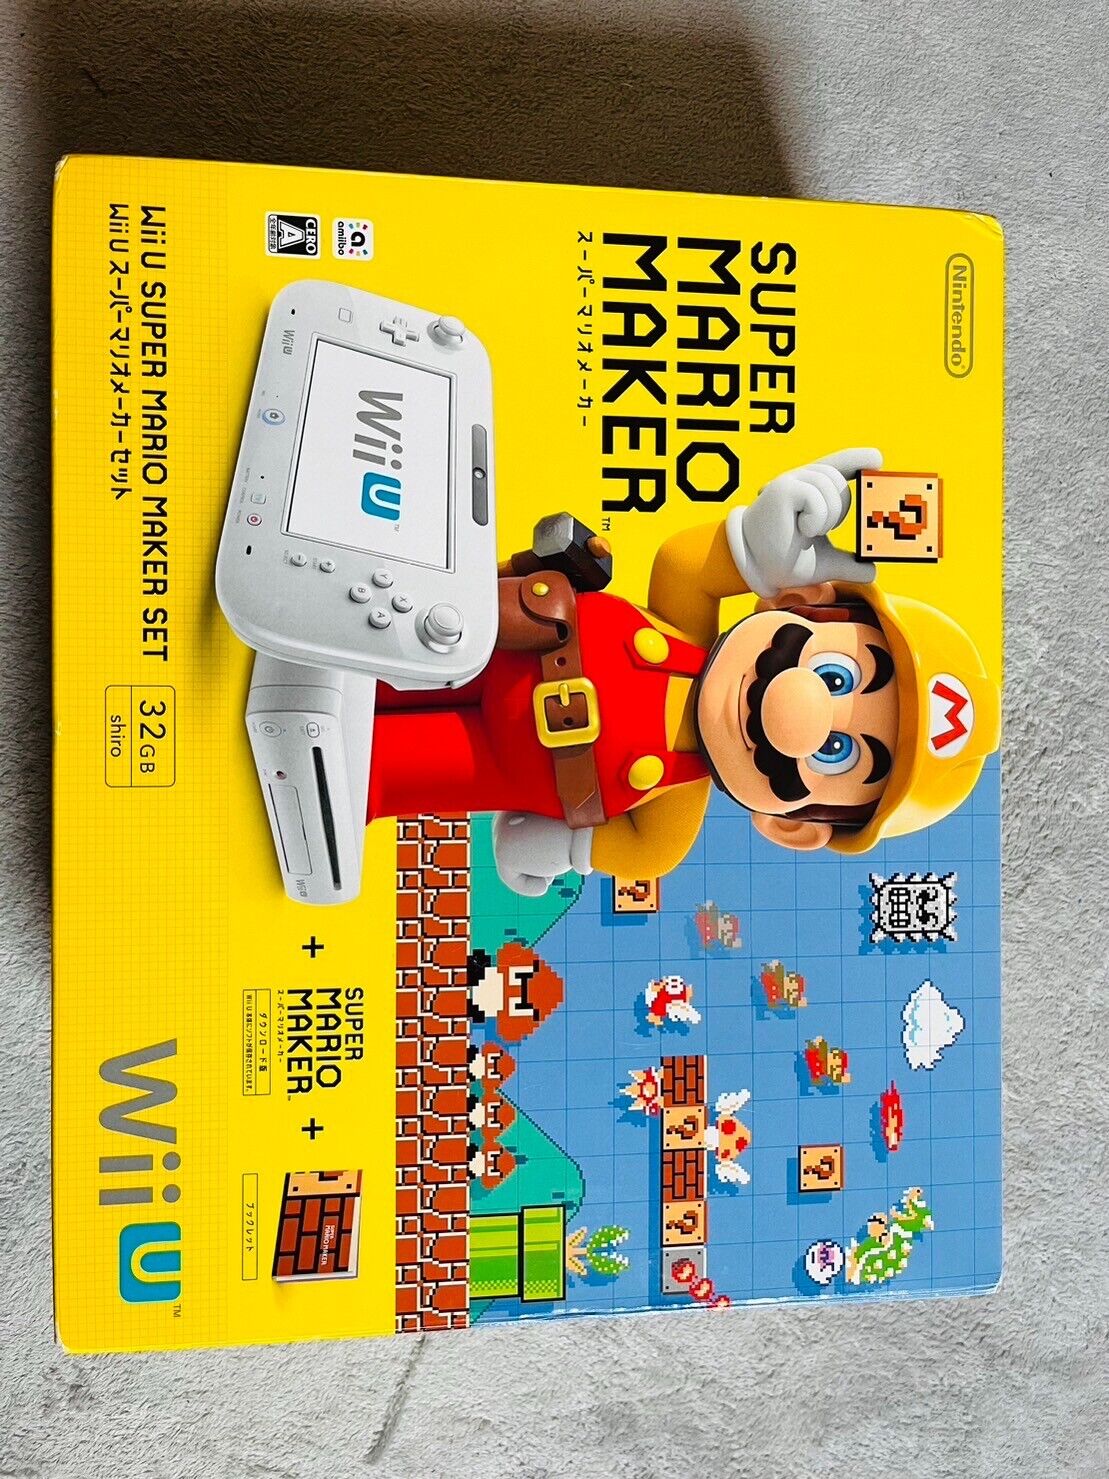 Super Mario Maker Nintendo Wii U Set Limited Edition Box 32GB Game